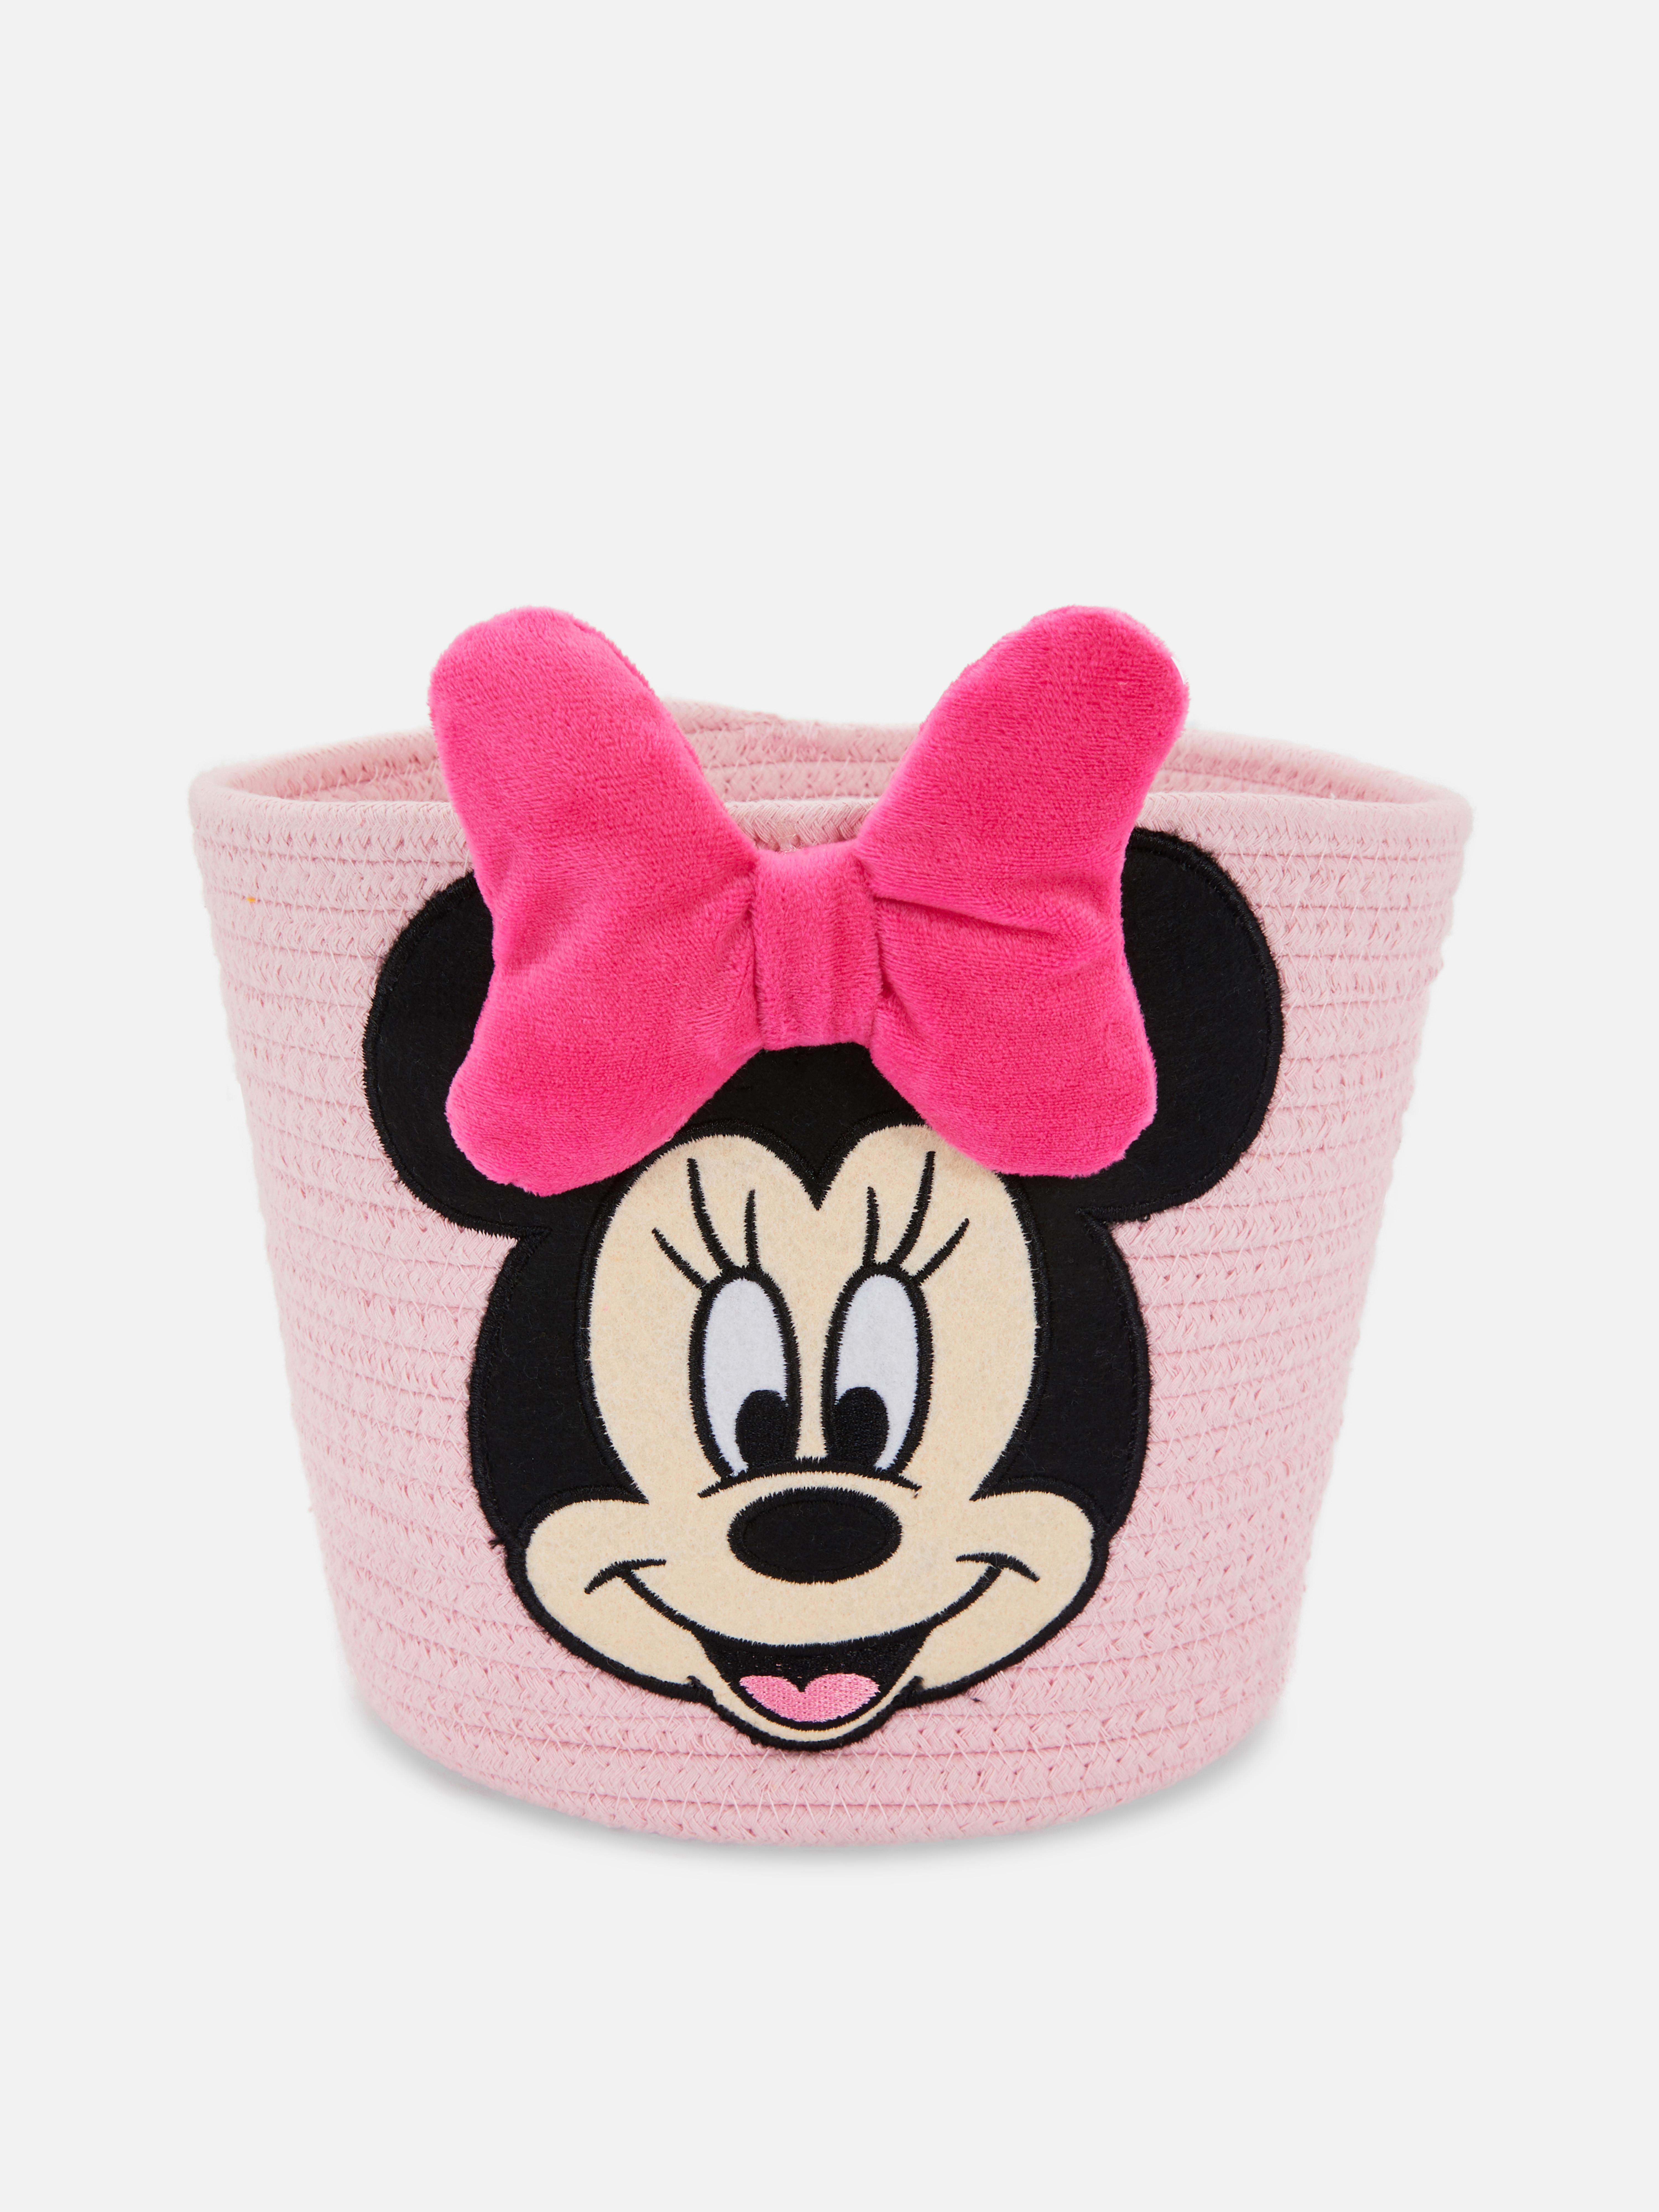 Disney's Minnie Mouse 3D Storage Basket